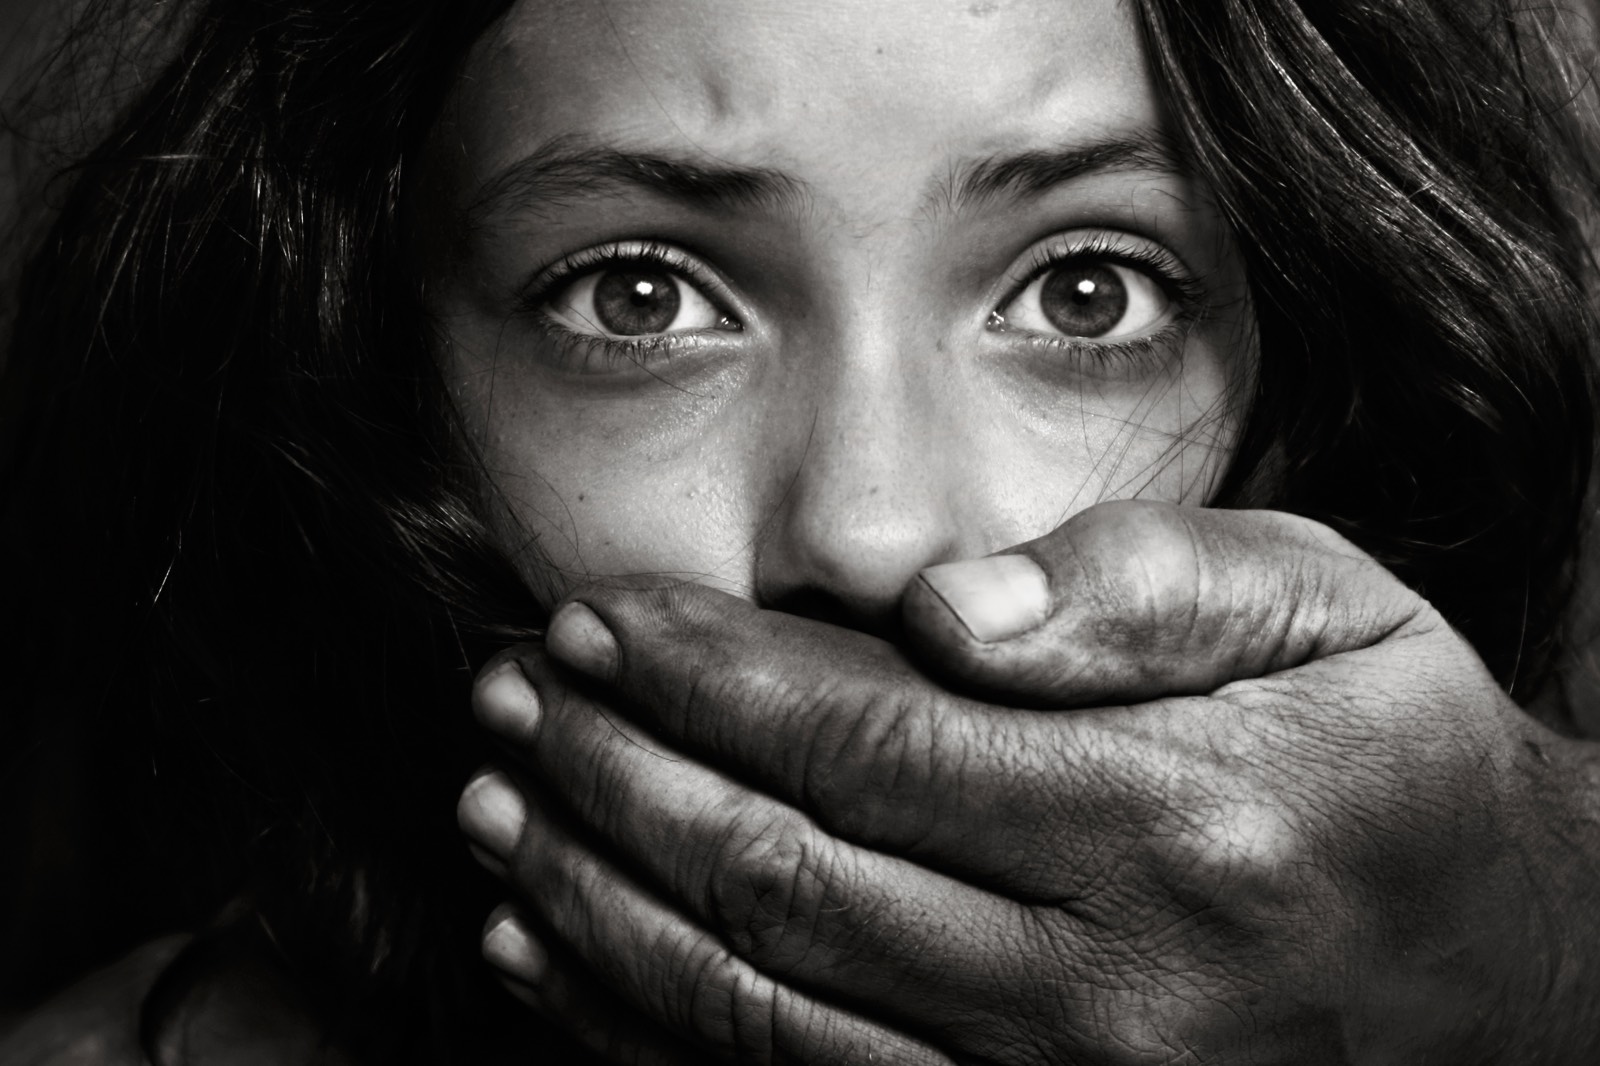 human child trafficking sex slave